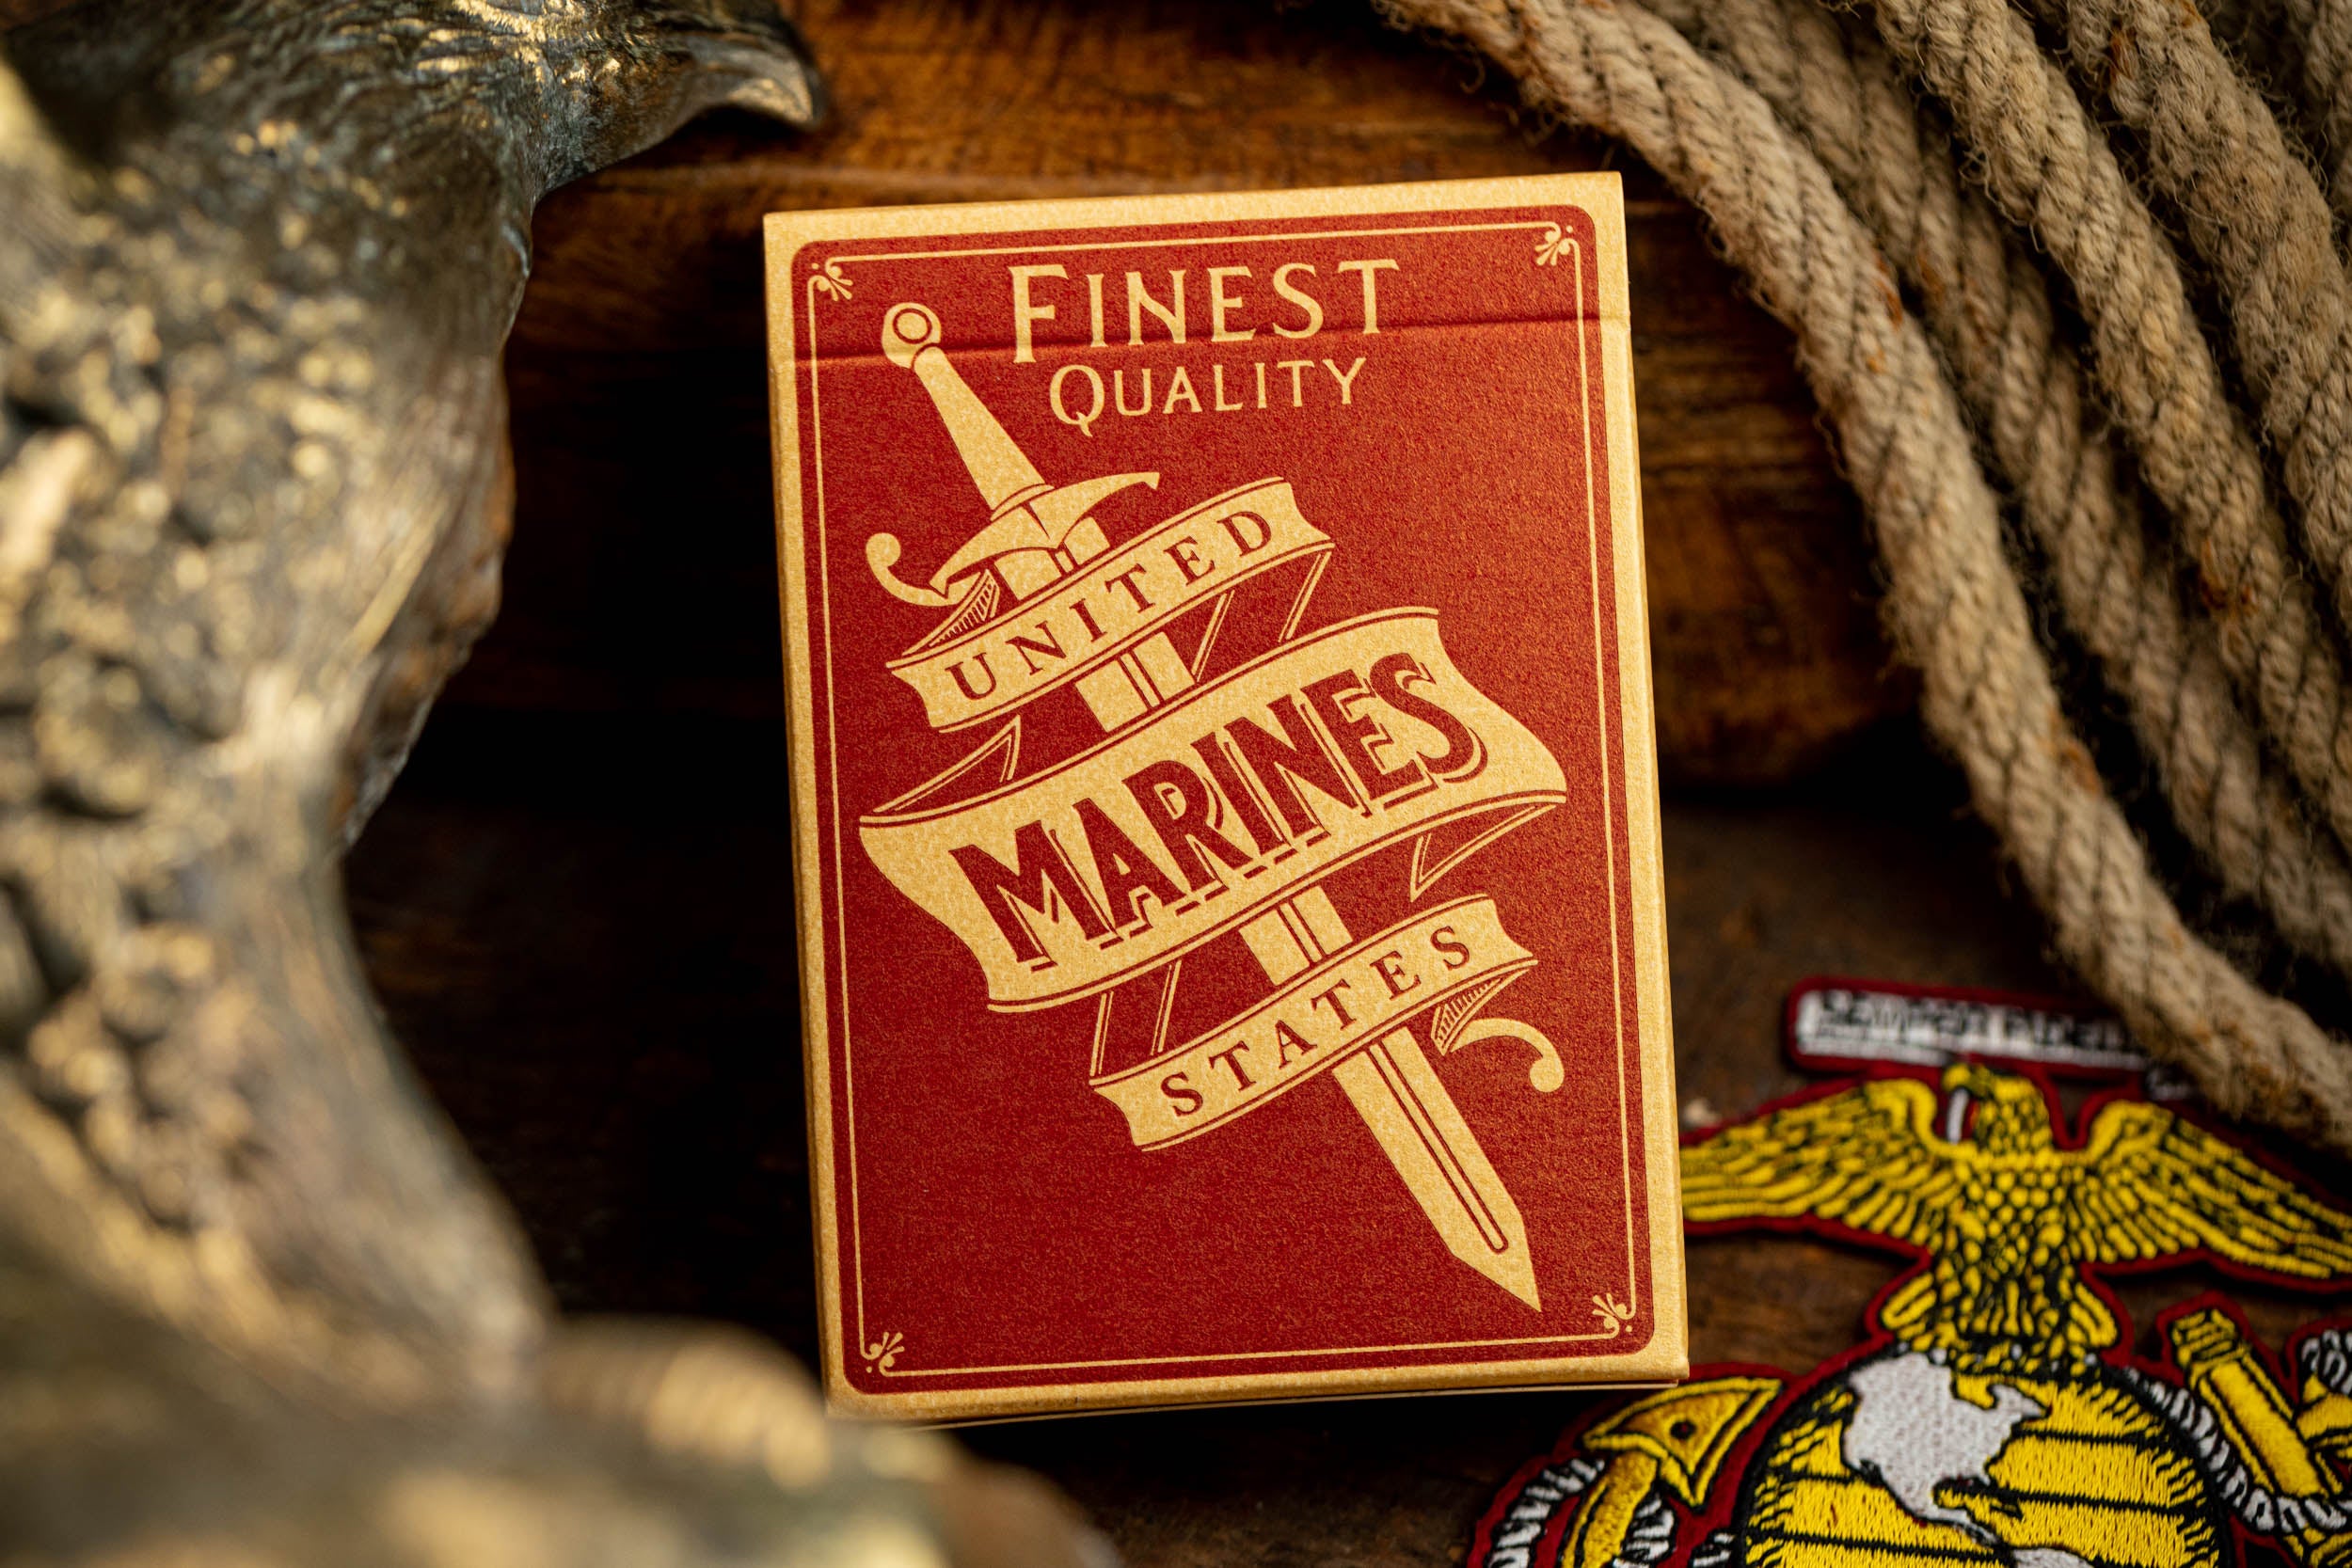 Marines Gilded